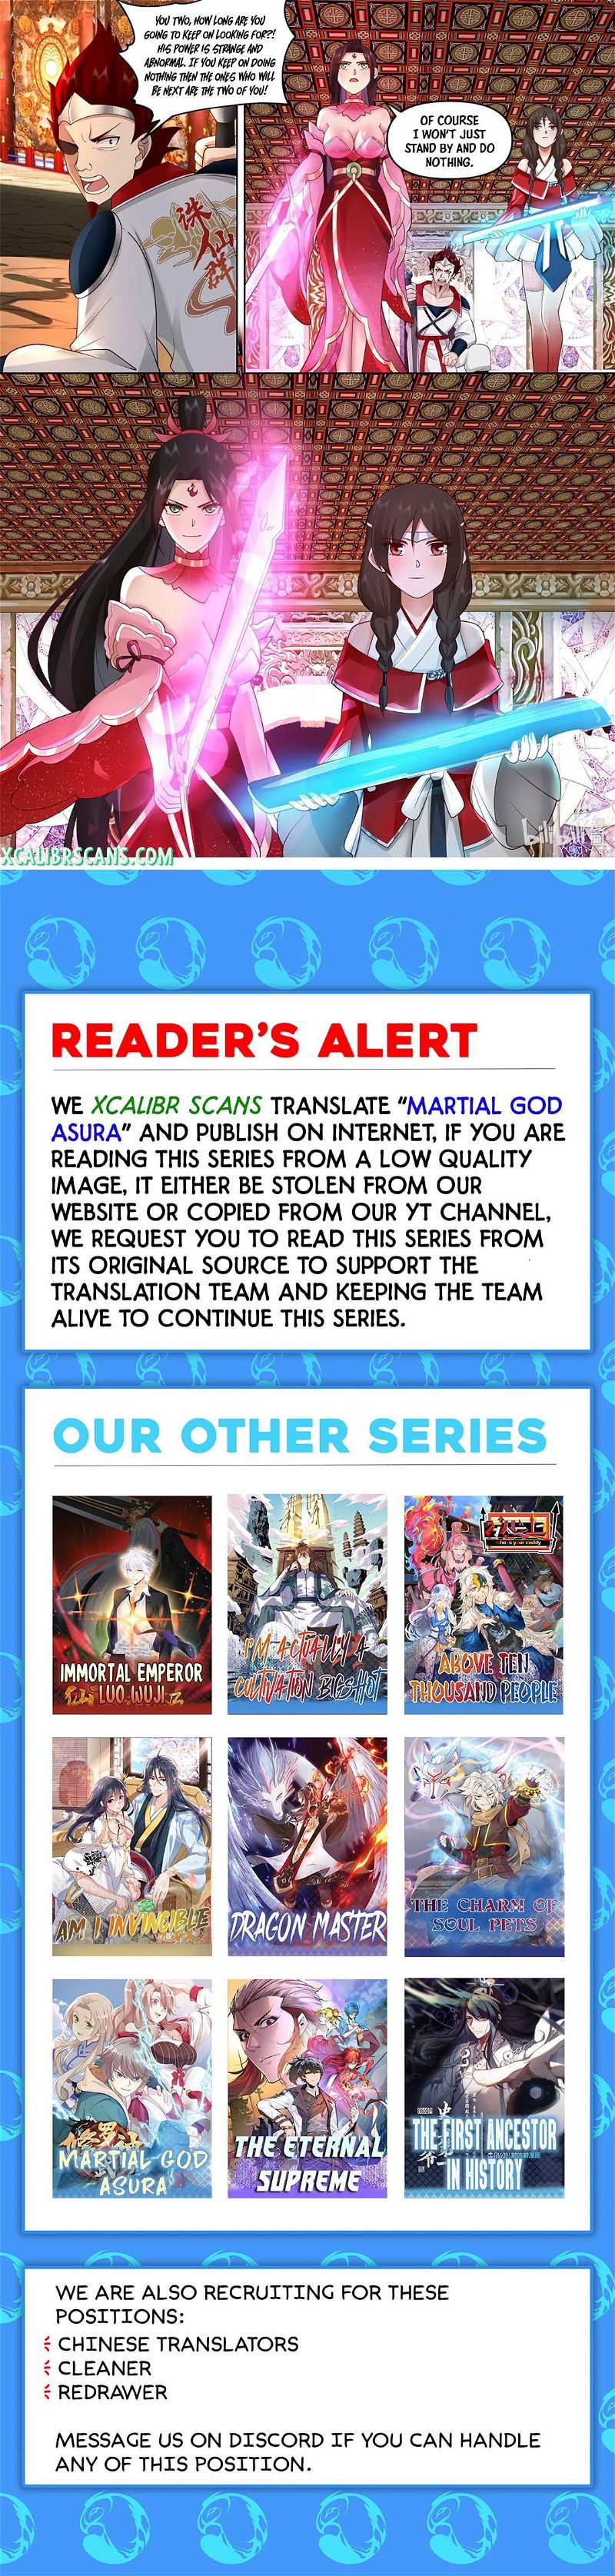 Martial God Asura Chapter 479 page 10